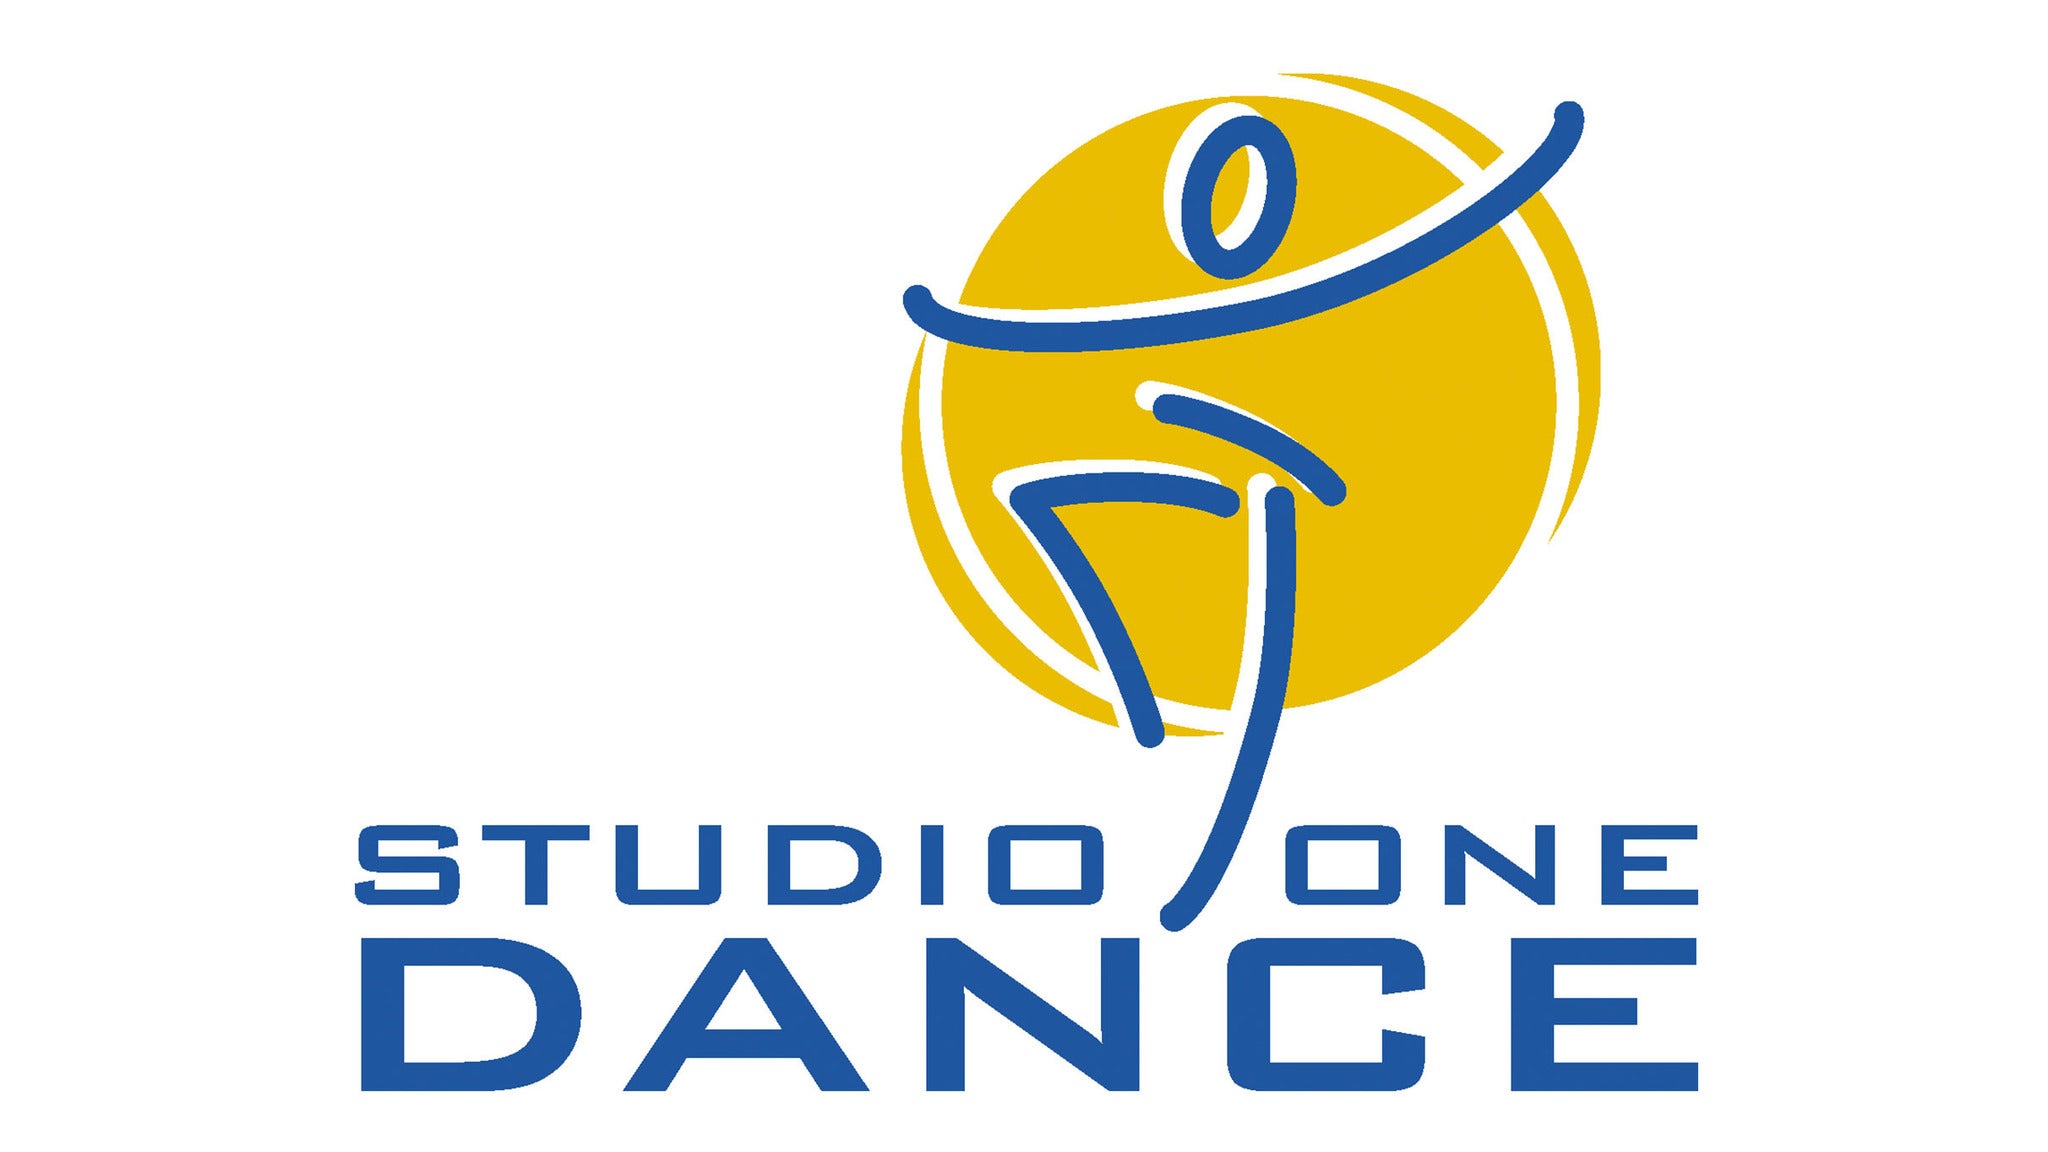 Studio One Dance presale information on freepresalepasswords.com